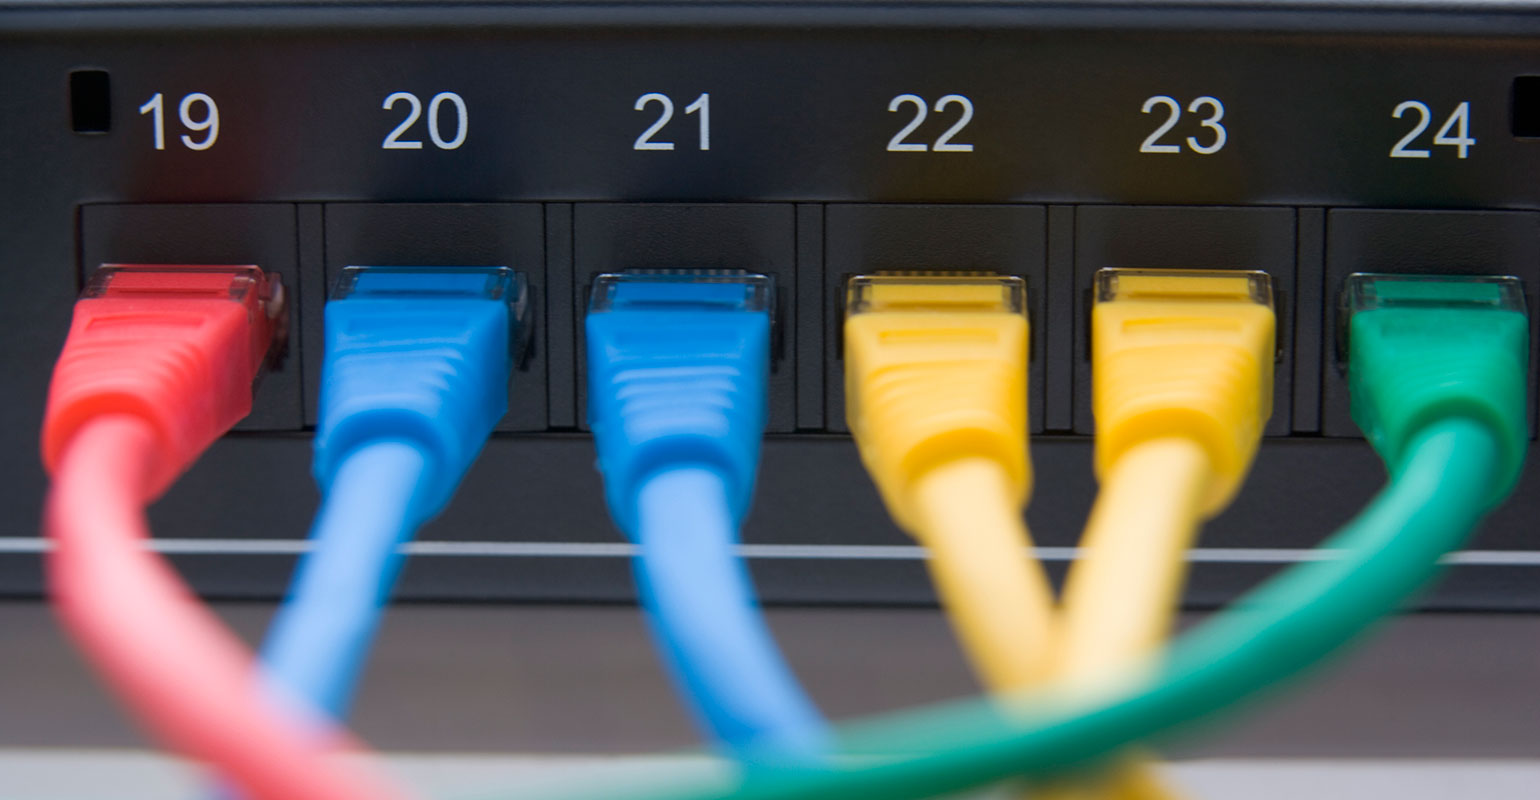 Deutsche Telekom Routers Targeted in Attack Global Hacking